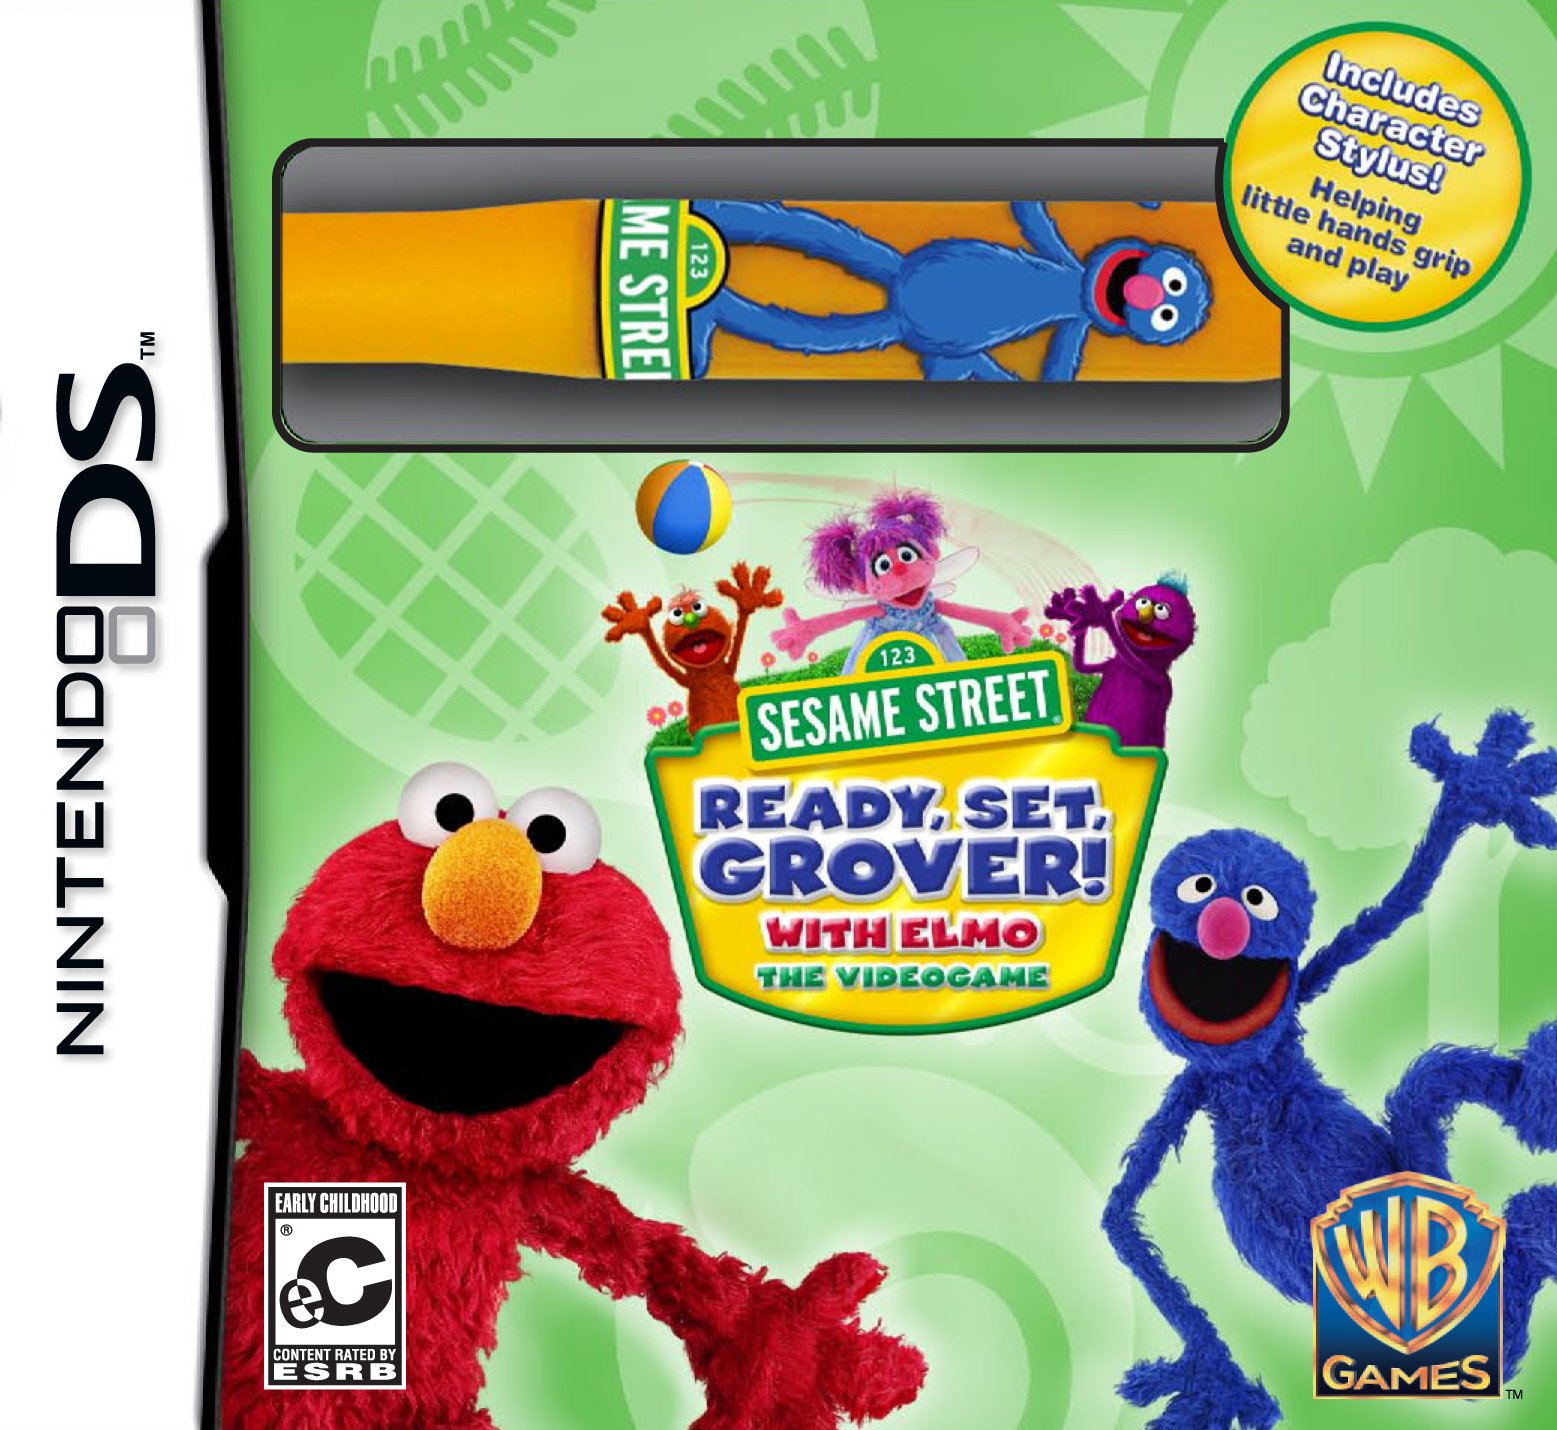 Ready, Set, Grover